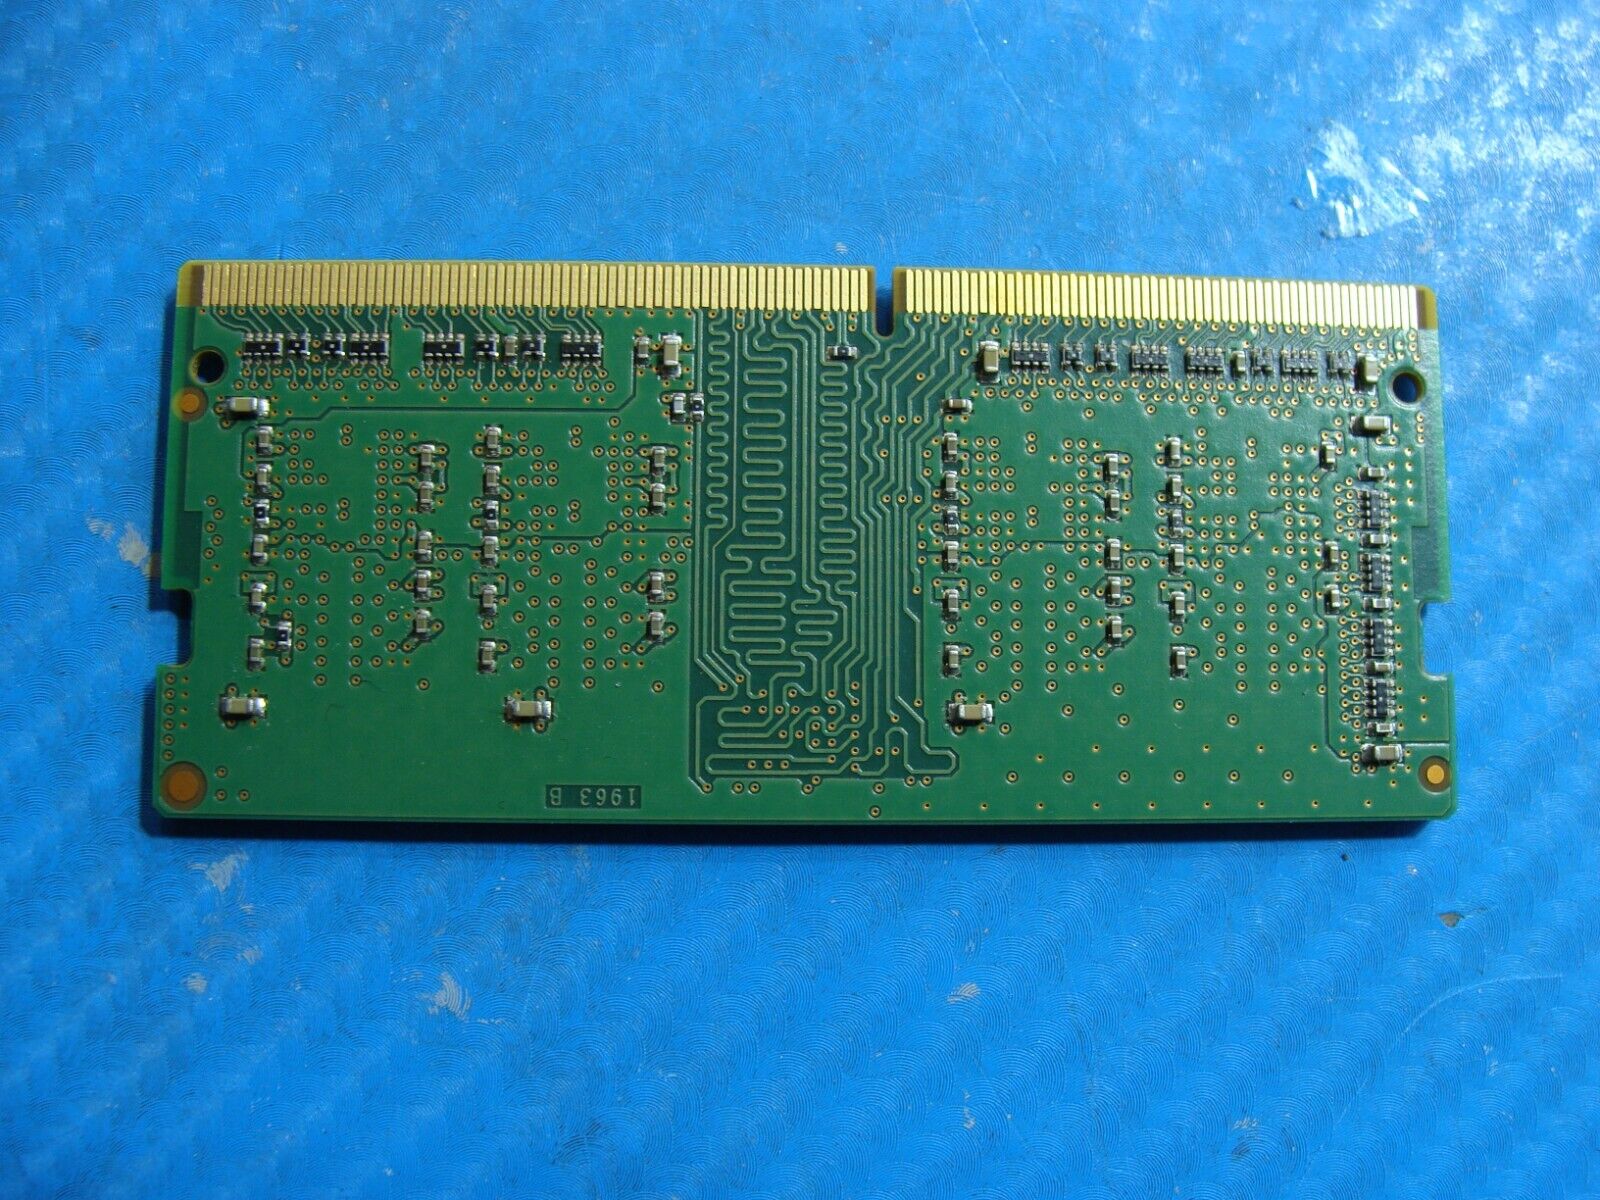 Dell 15 3567 Micron 2GB 1Rx16 PC4-2400T Memory RAM SO-DIMM MTA4ATF25664HZ-2G3B1